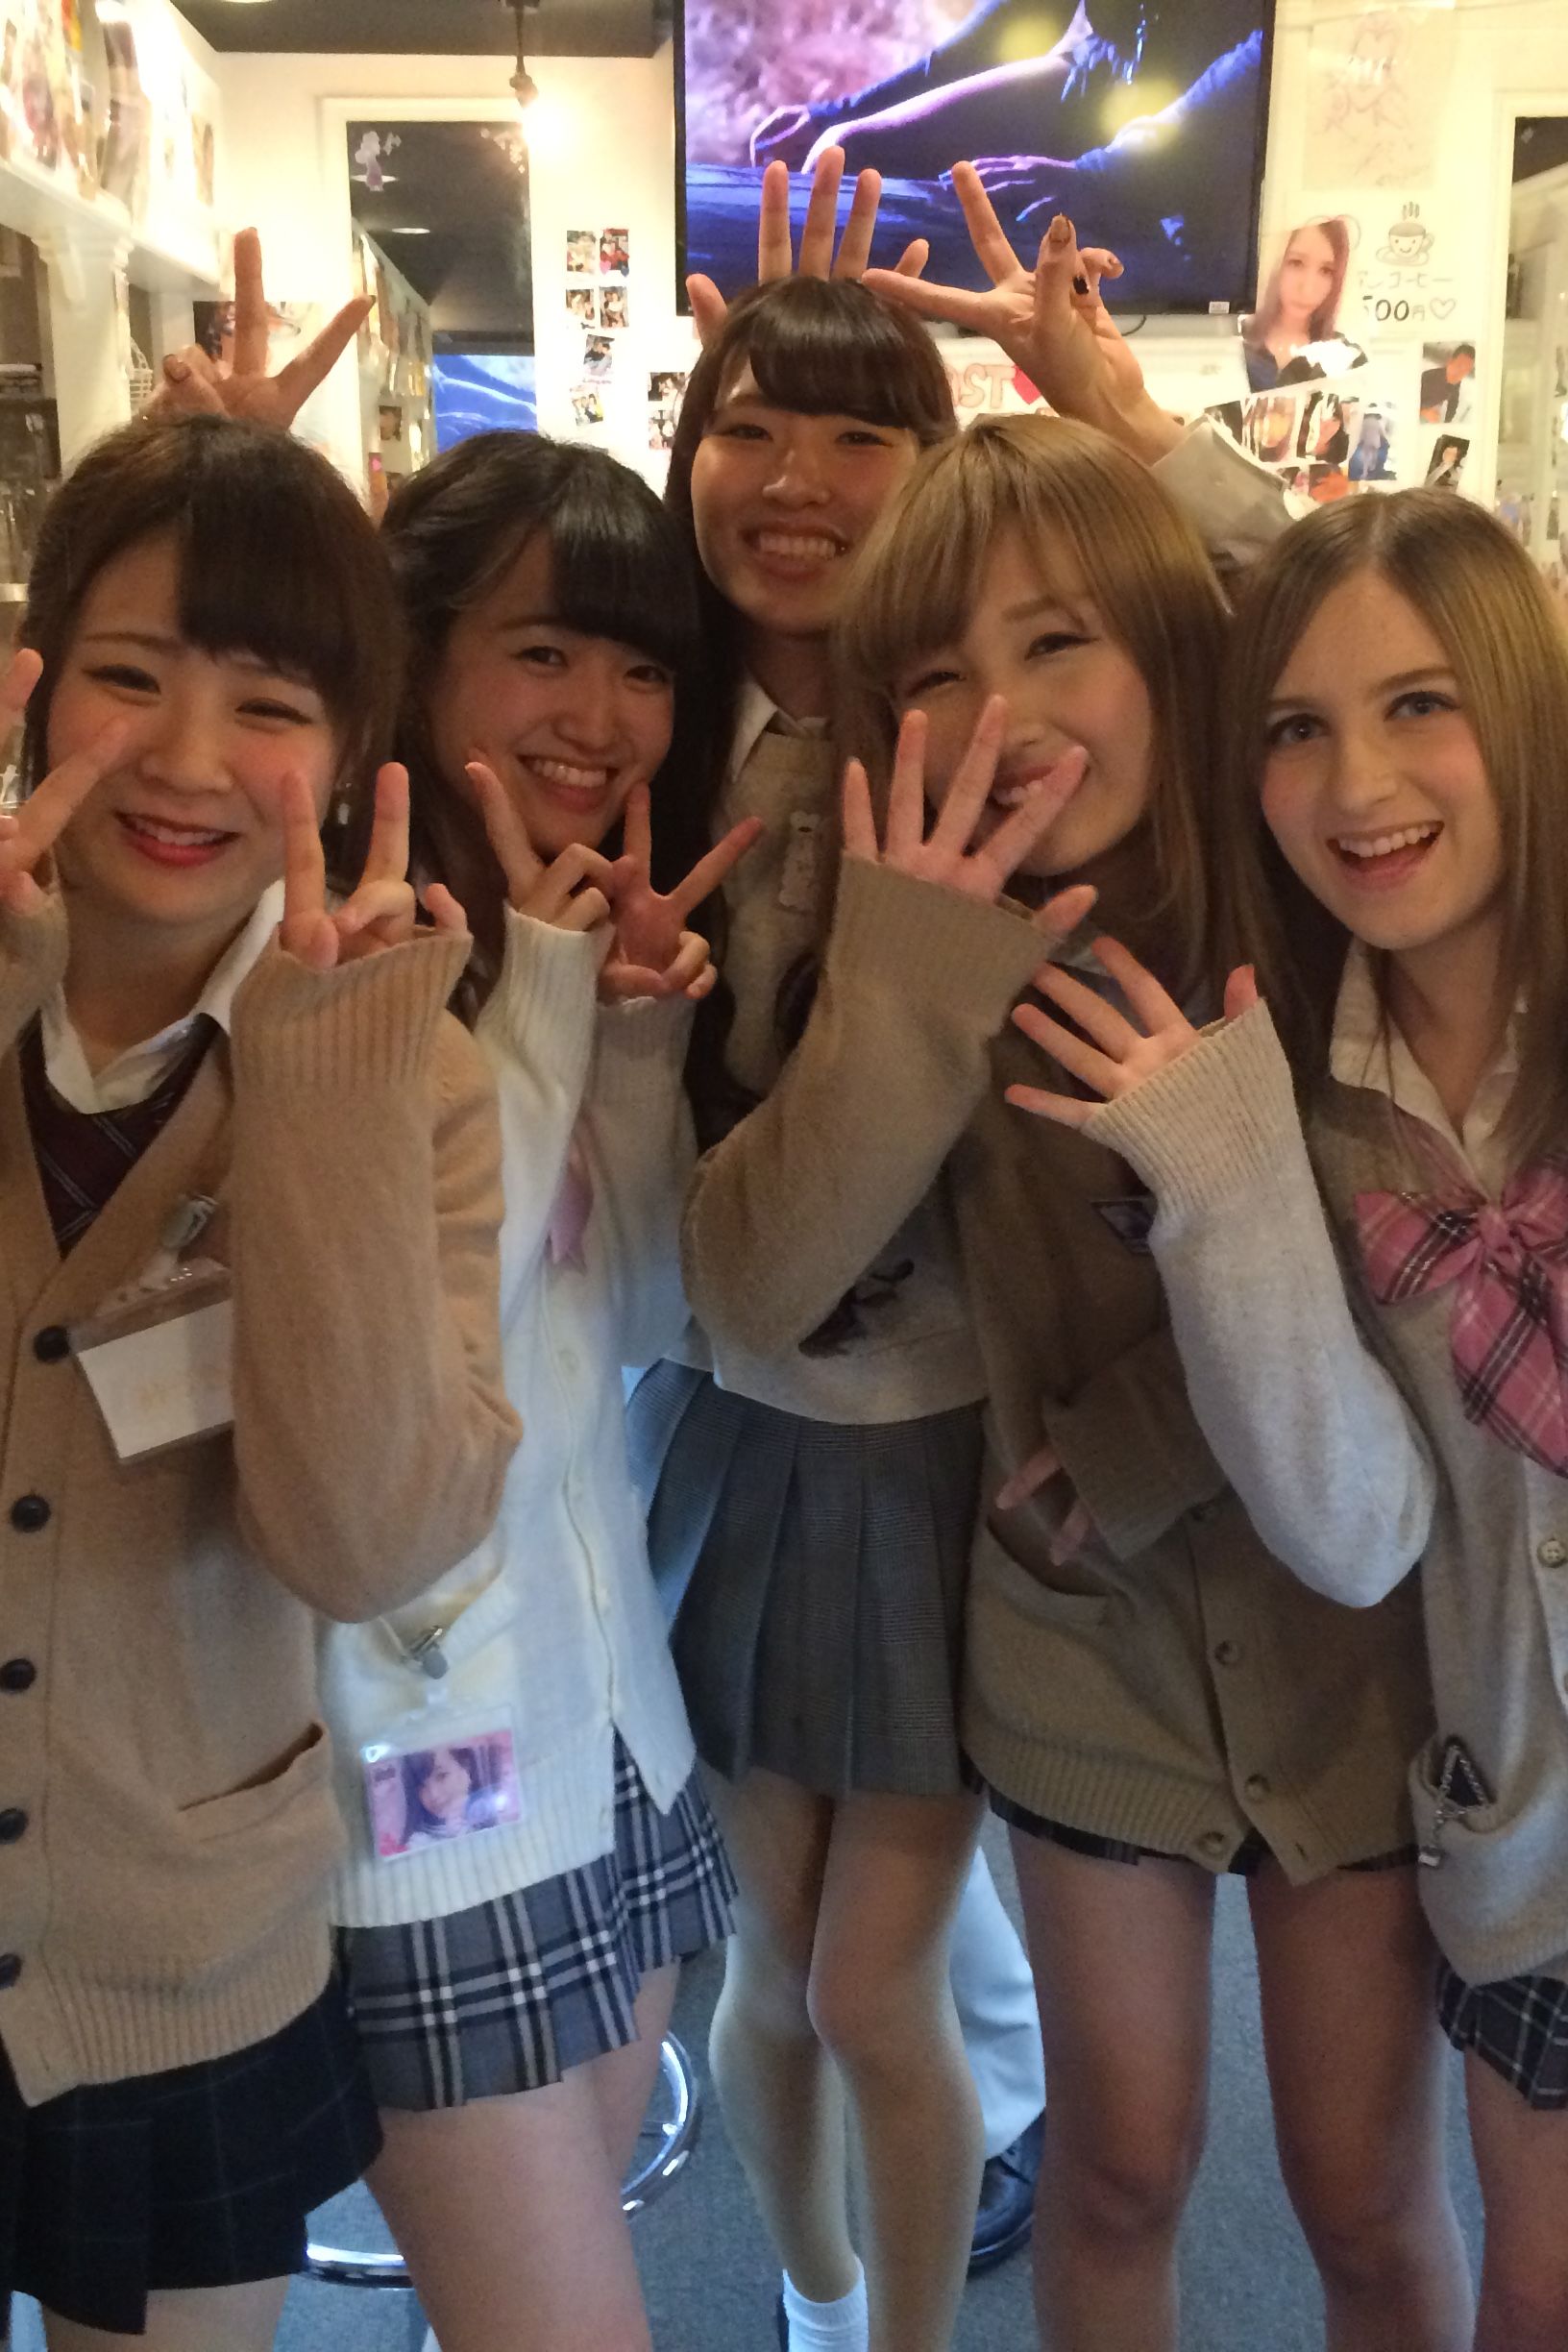 Hottest Teen In School - Japan school girl culture: The dark truth | CNN